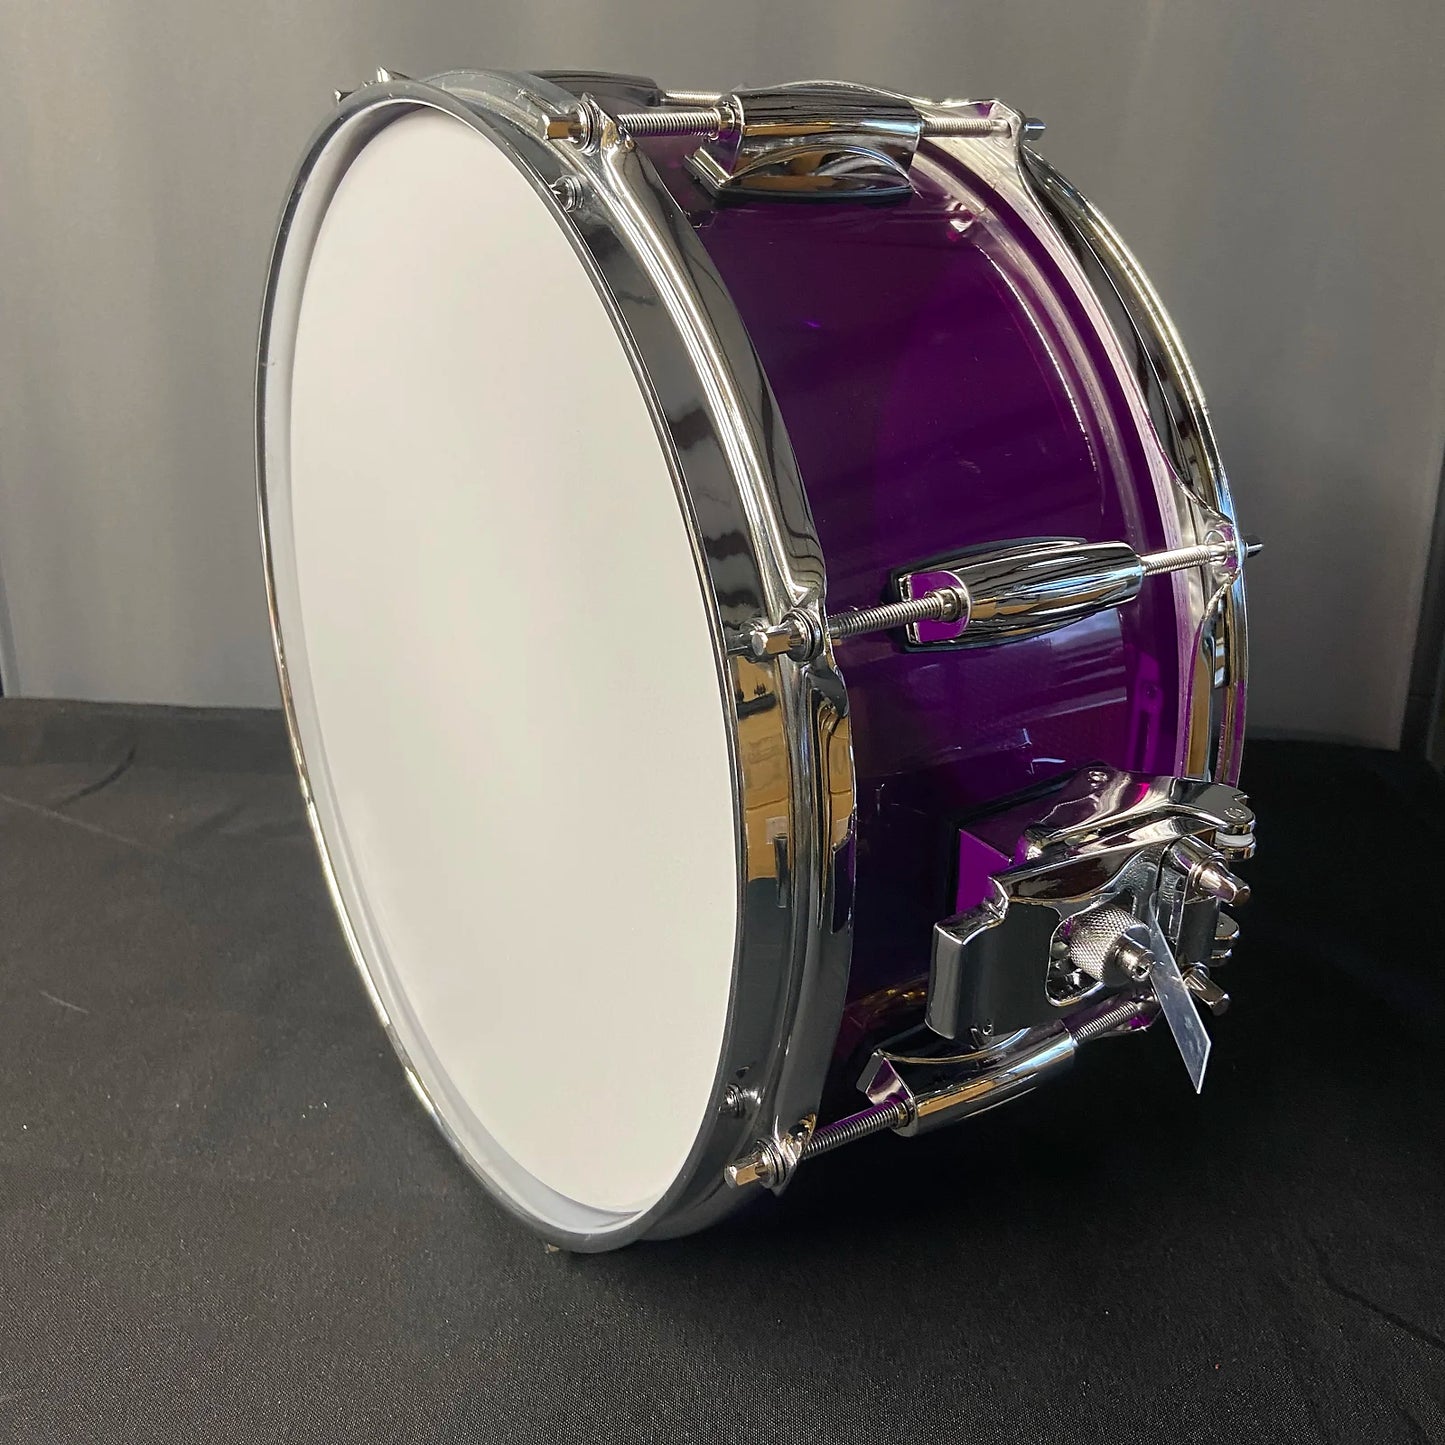 Purple Acrylic Snare Drum